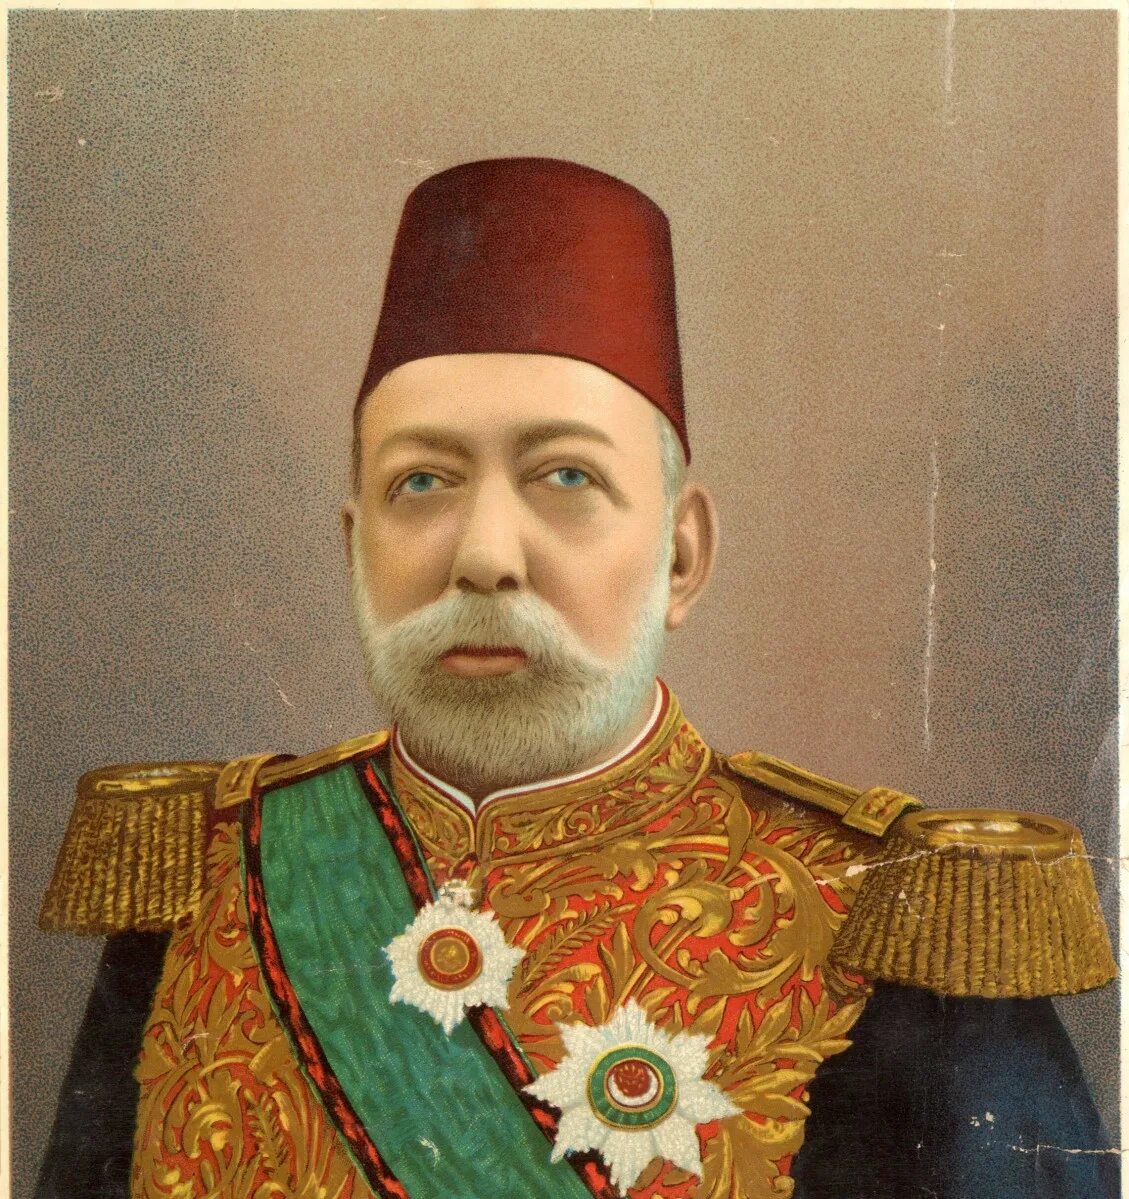 Султаны турков